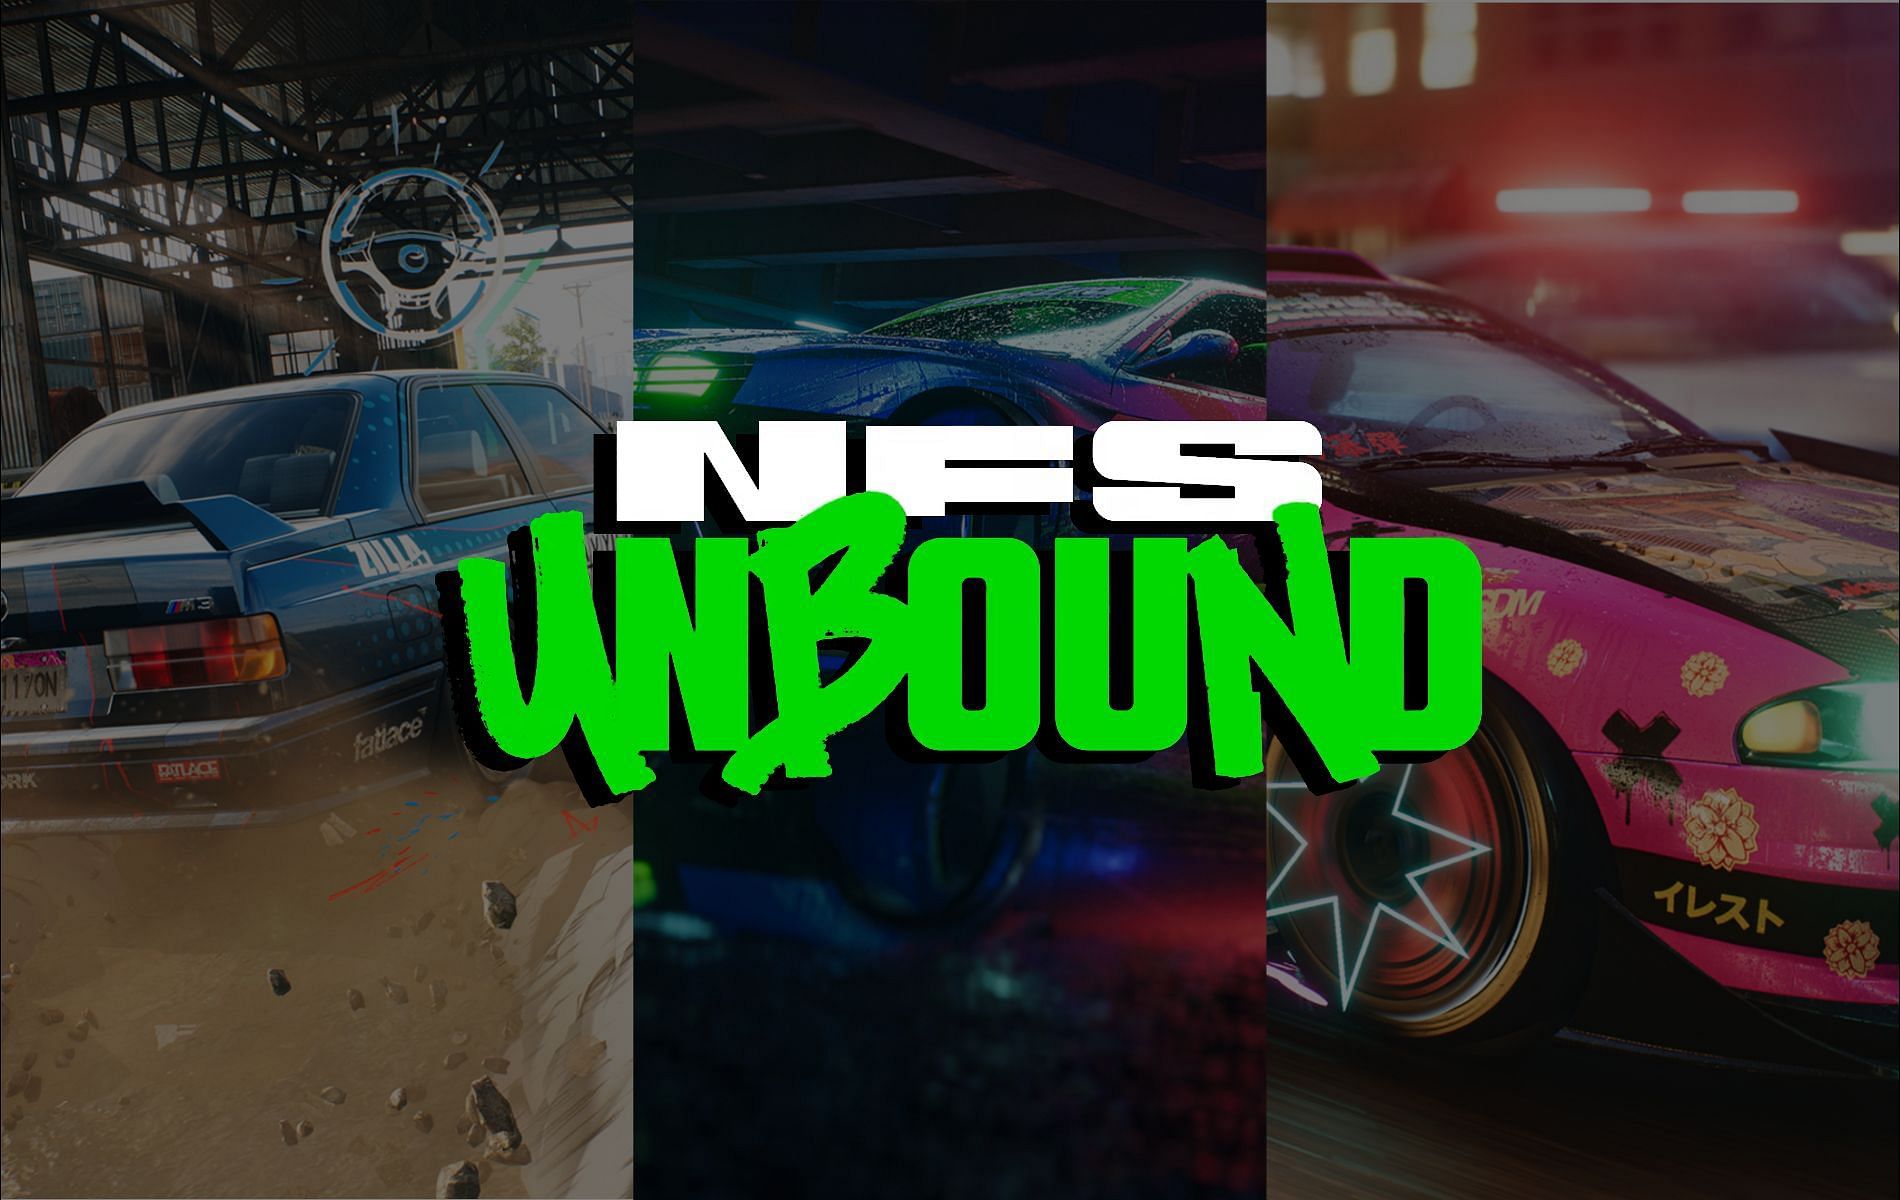 NFS Unbound has a Steam page now : r/needforspeed